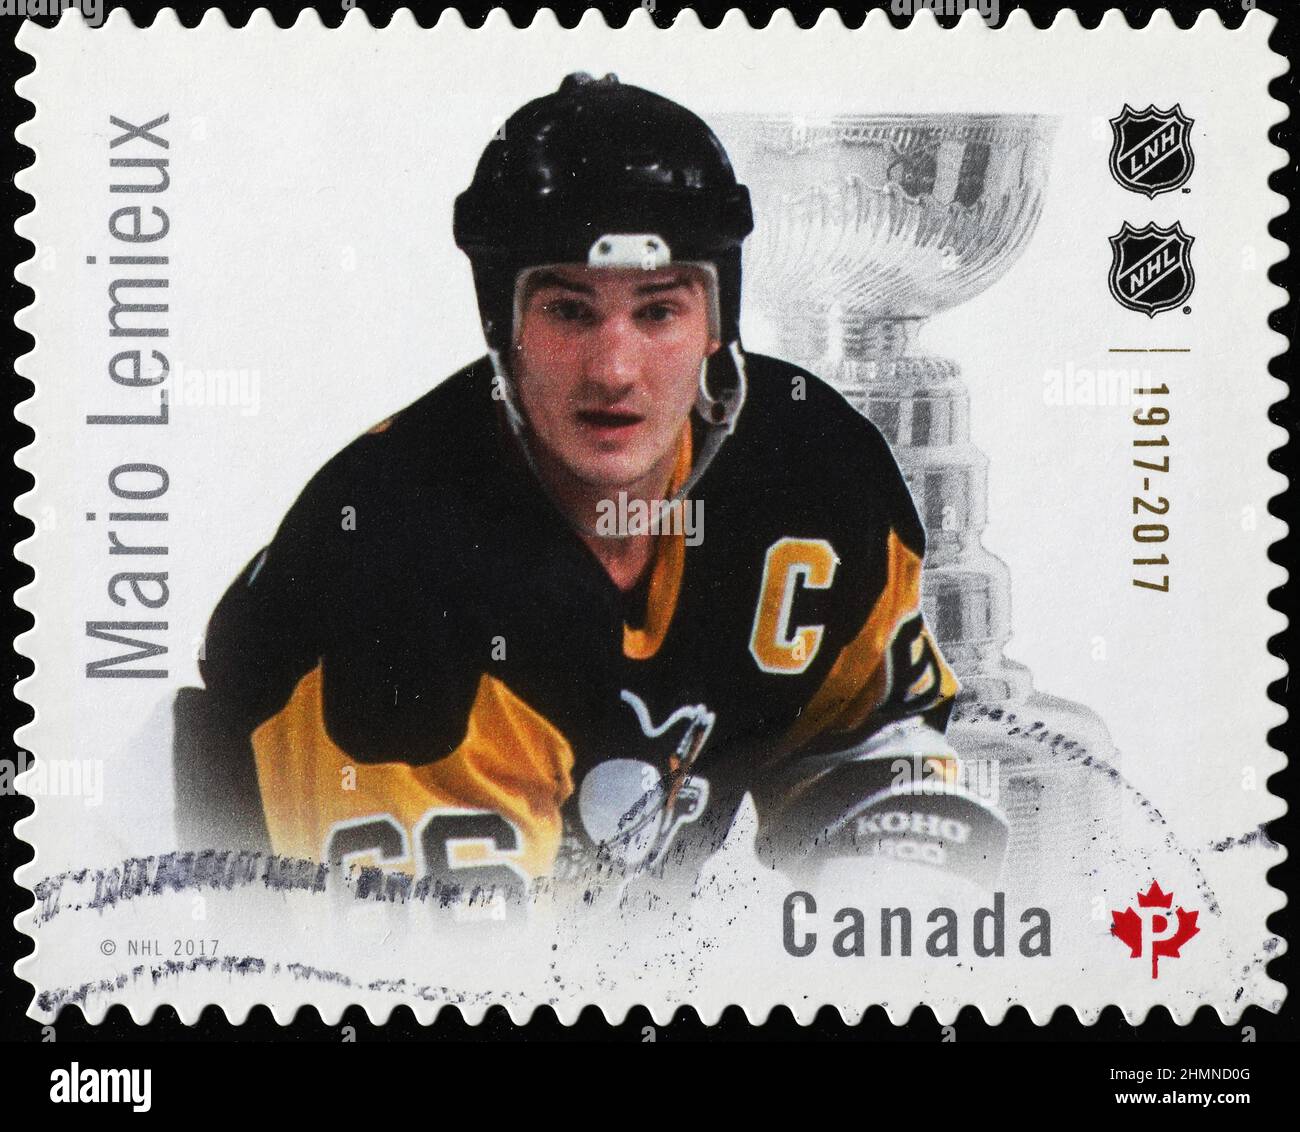 Canadian hockey player Mario Lemieux on postage stamp Stock Photo